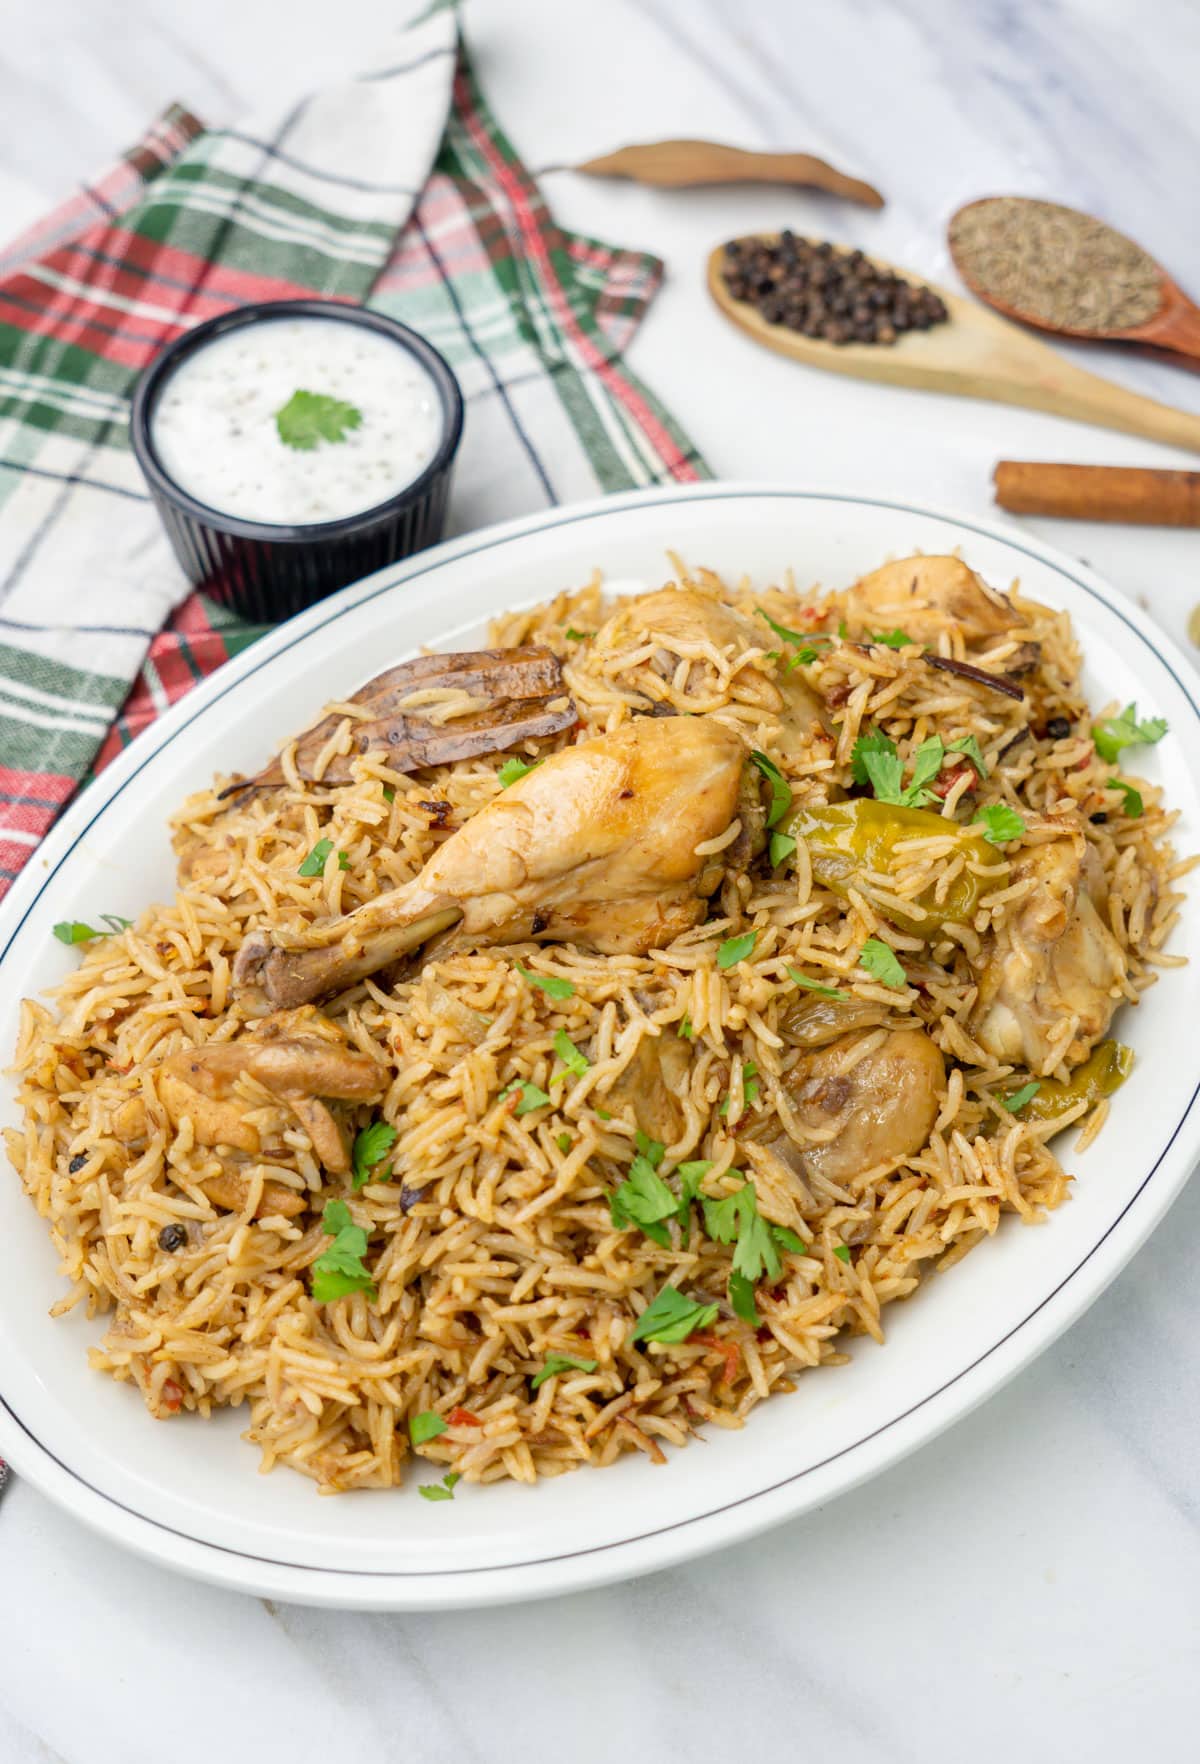 Indian Chicken Rice garnished with cilantro with raita